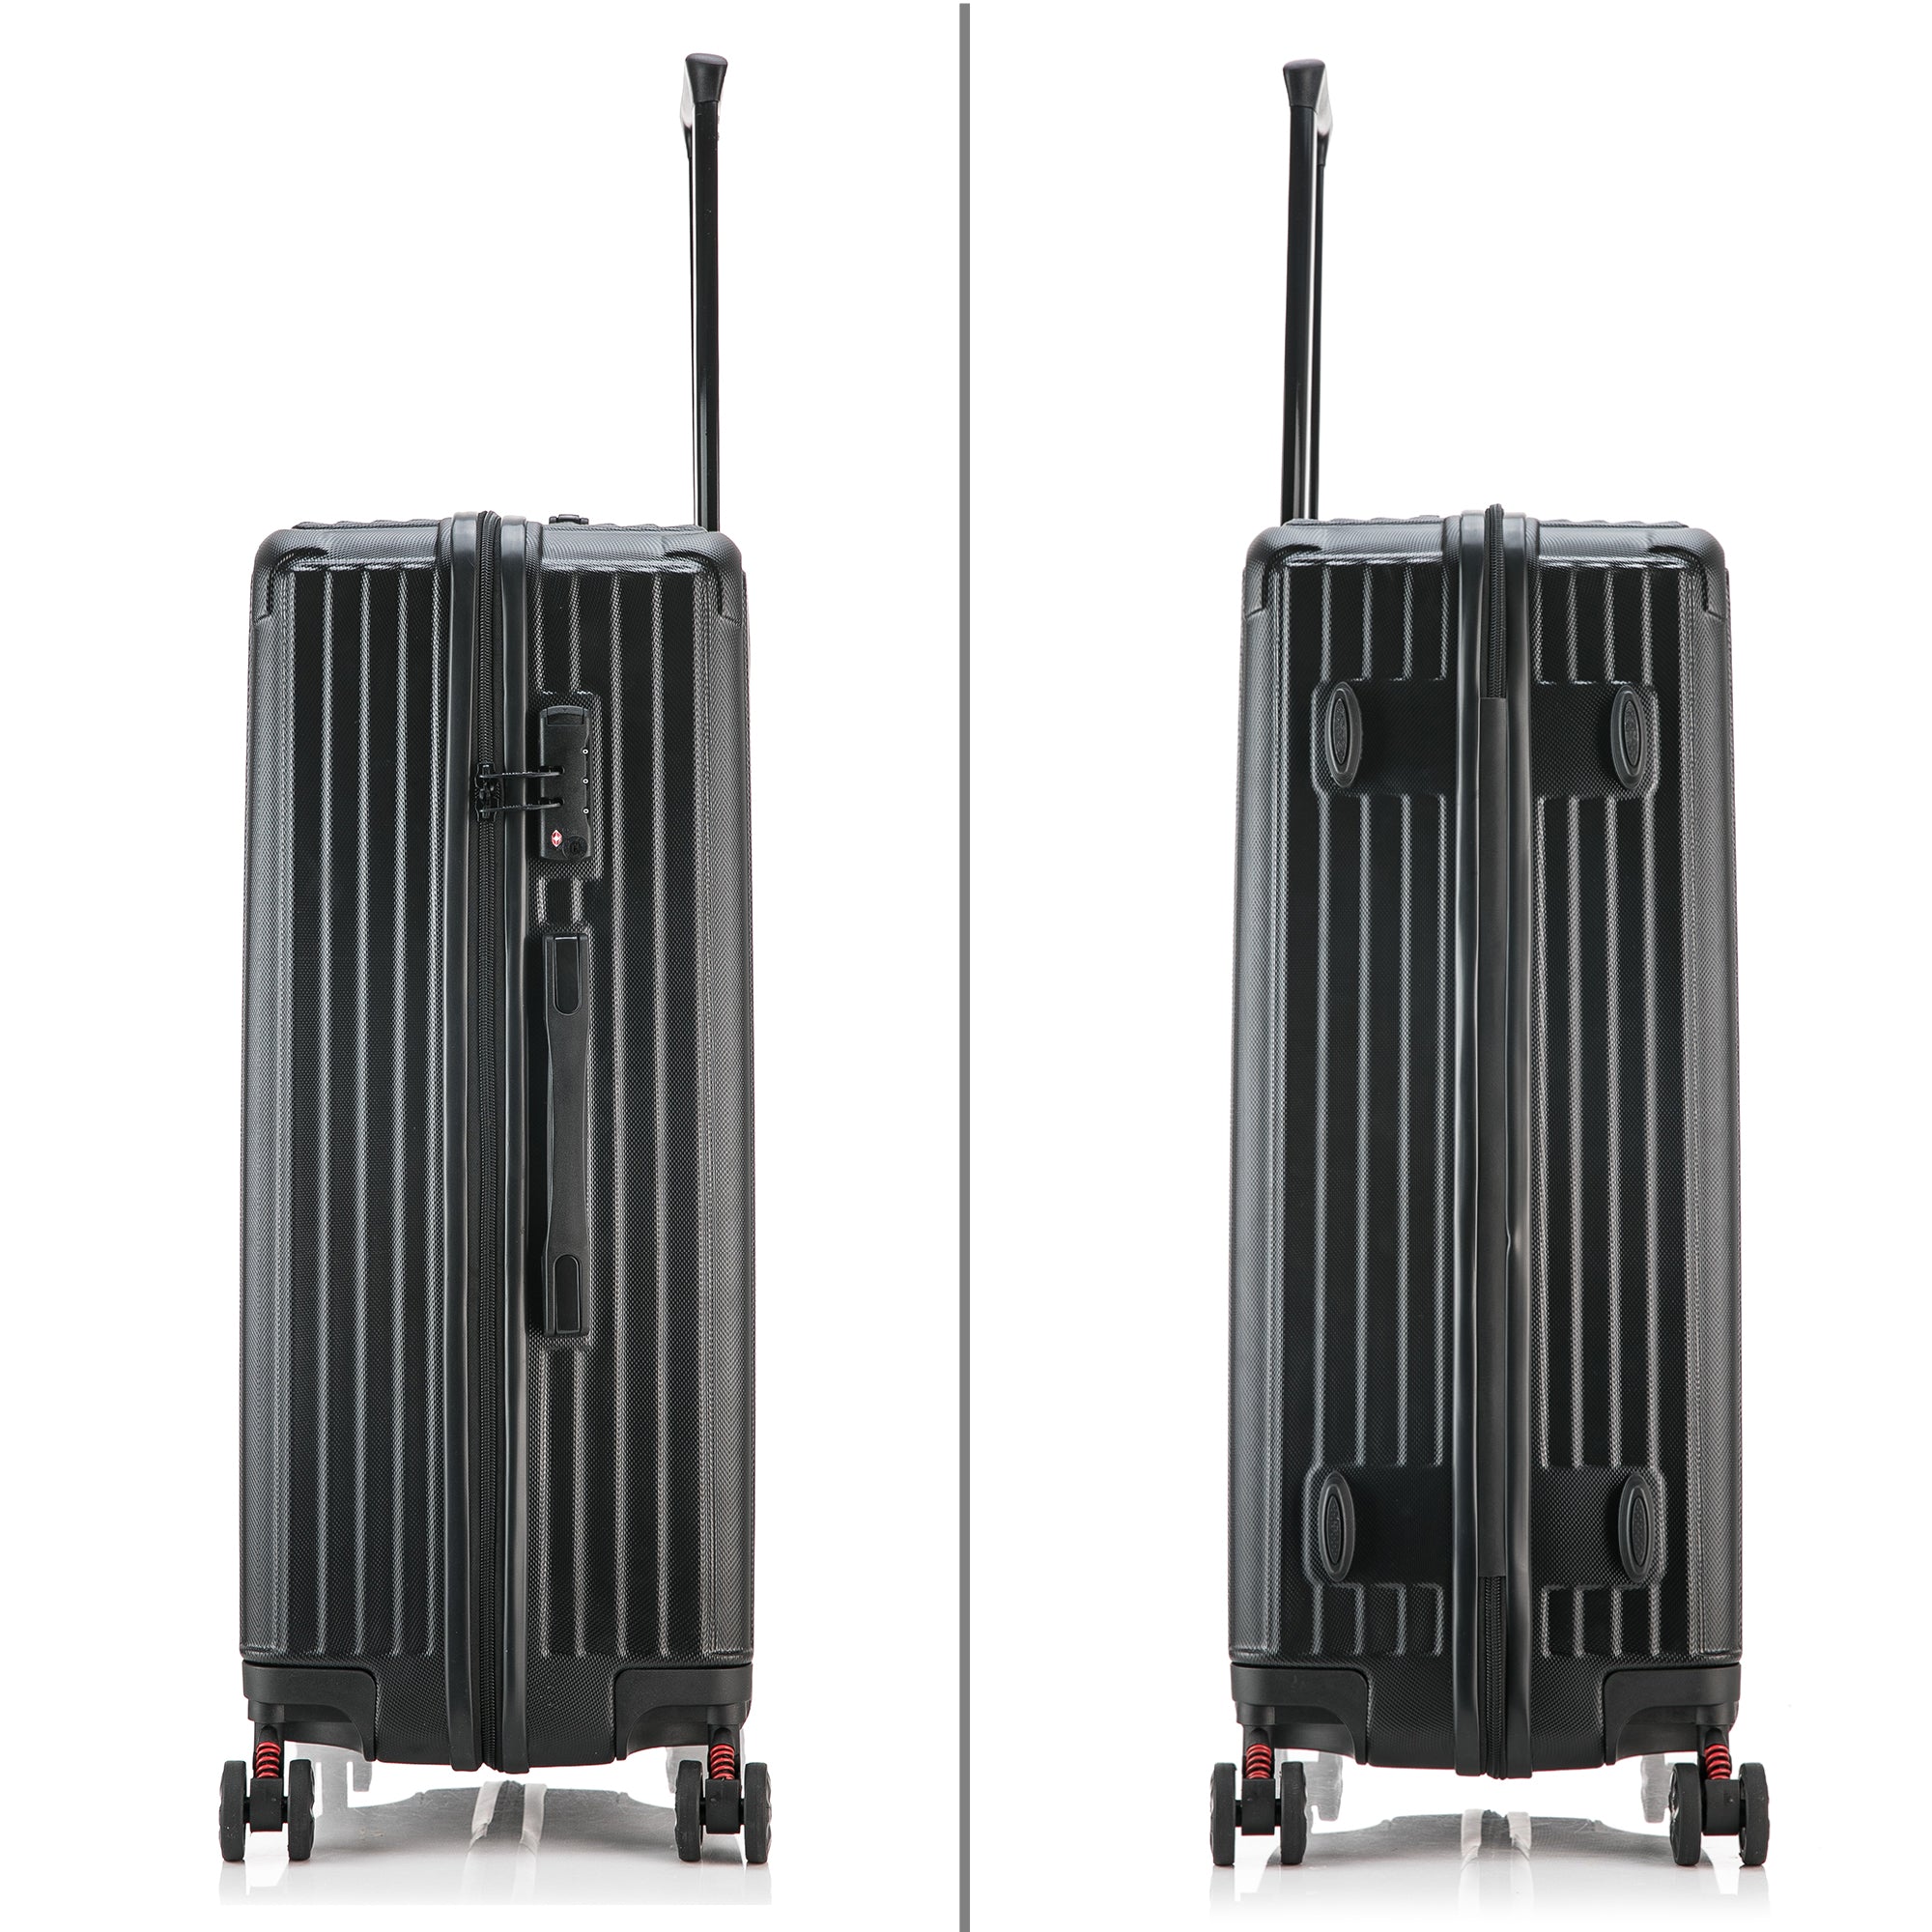 DUKAP STRATOS lightweight hardside spinner 3 piece luggage set  20'',24'', 28'' inch Black